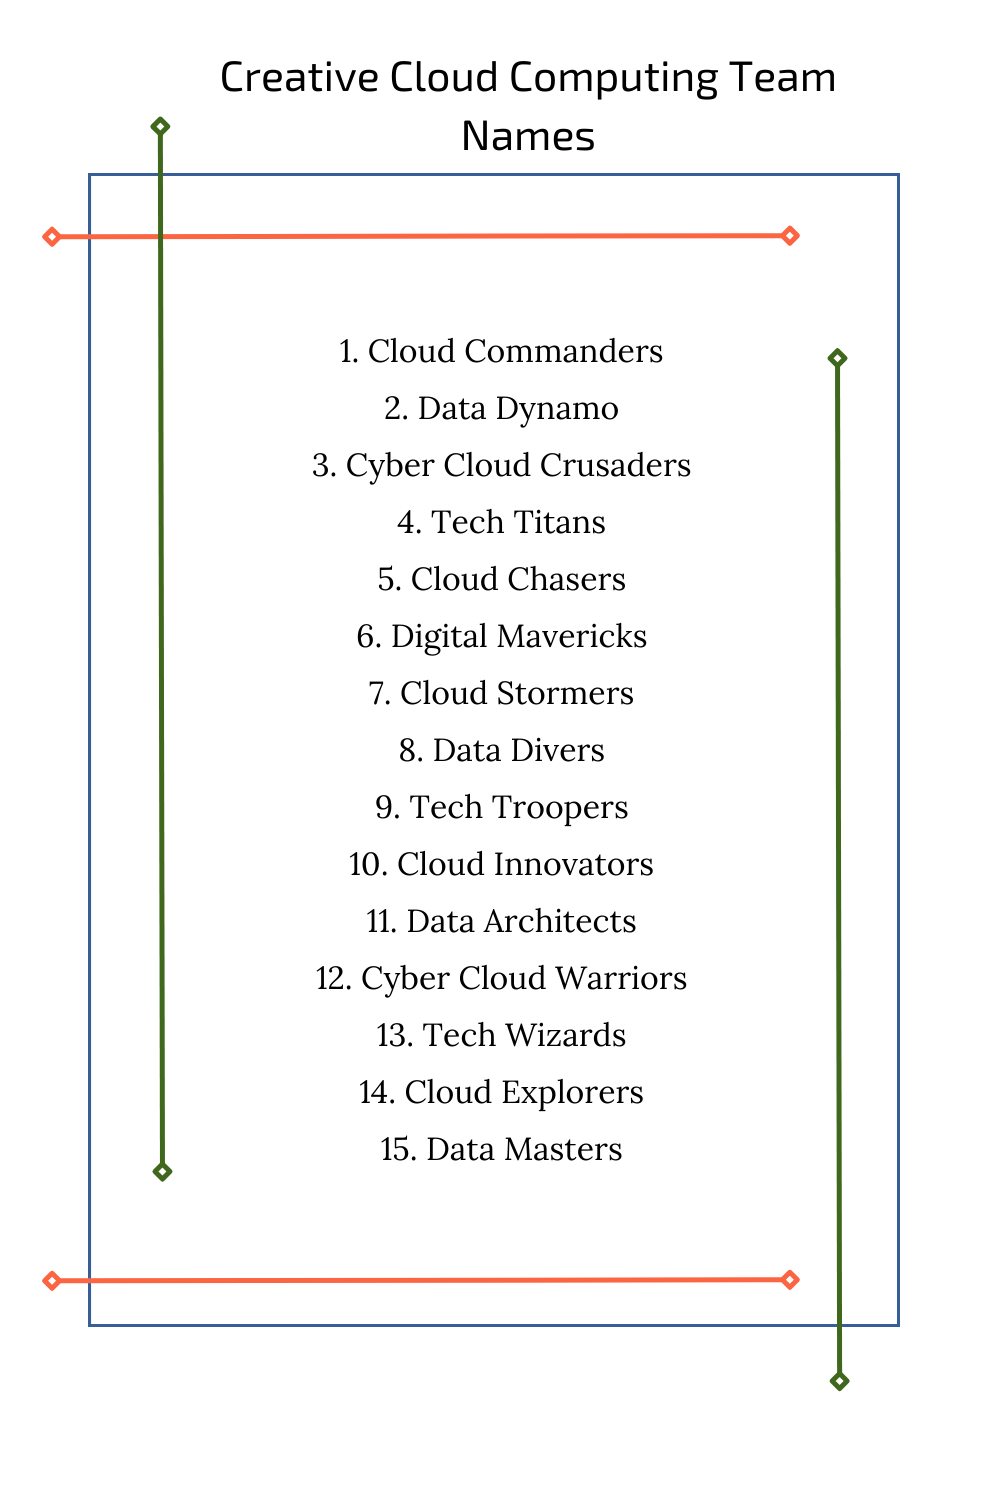 Creative Cloud Computing Team Names